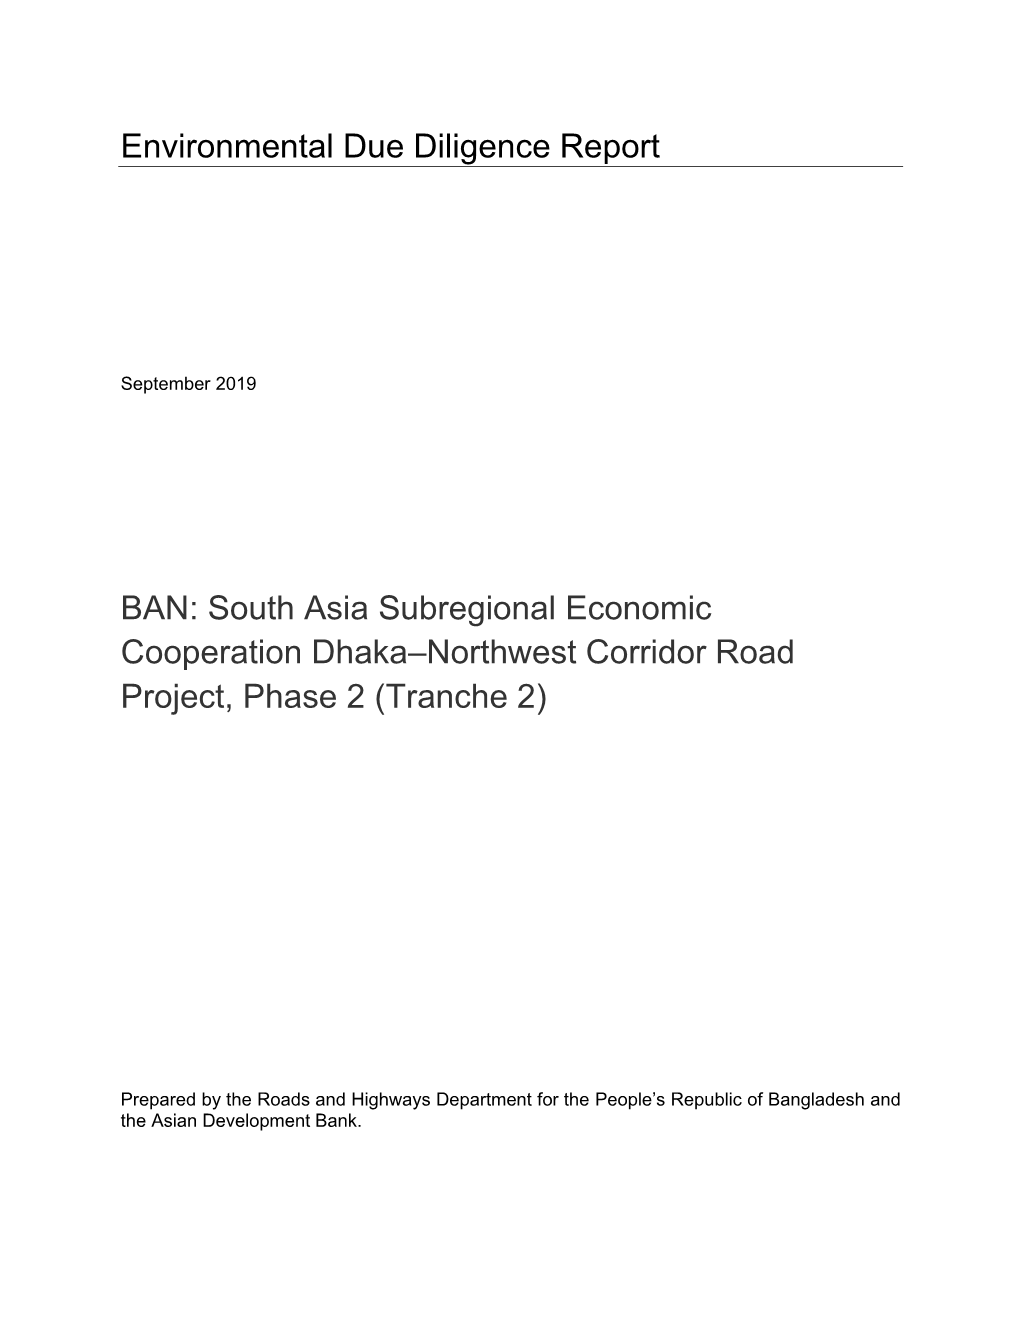 SASEC Dhaka-Northwest Corridor Road Project, Phase 2 (Tranche 2)